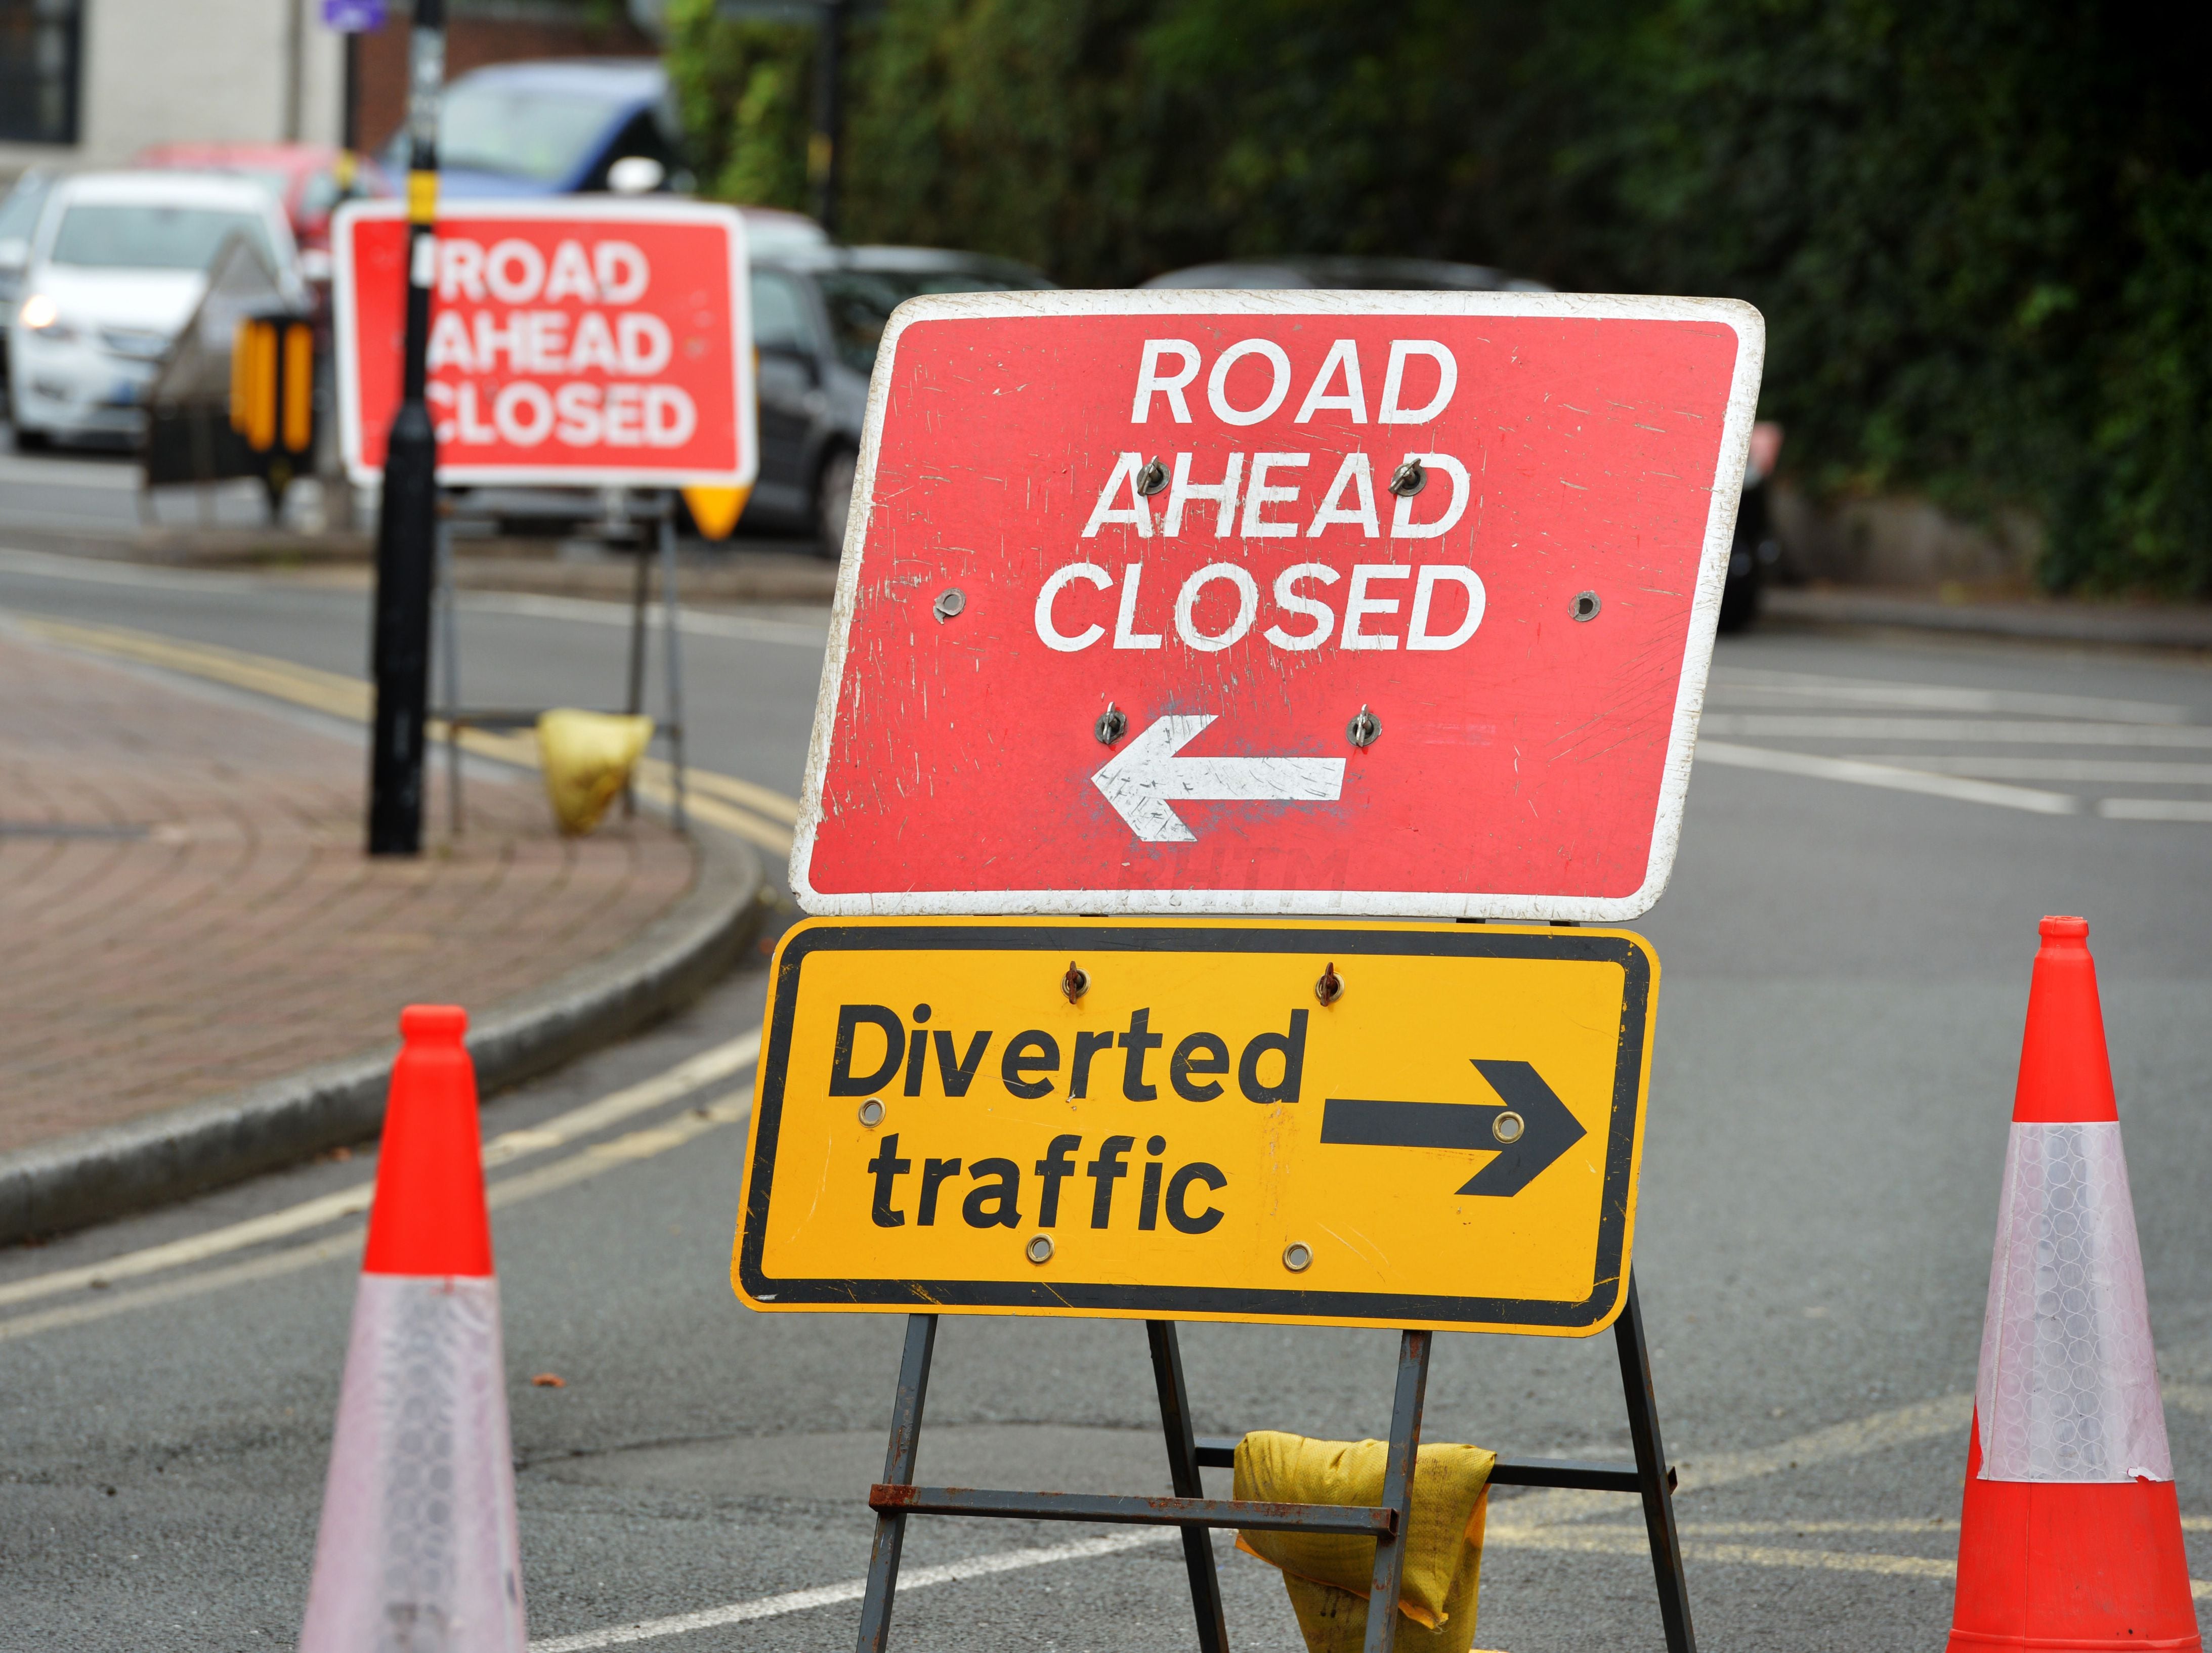 Week of disruption around roads in Sandwell as series of roadworks planned